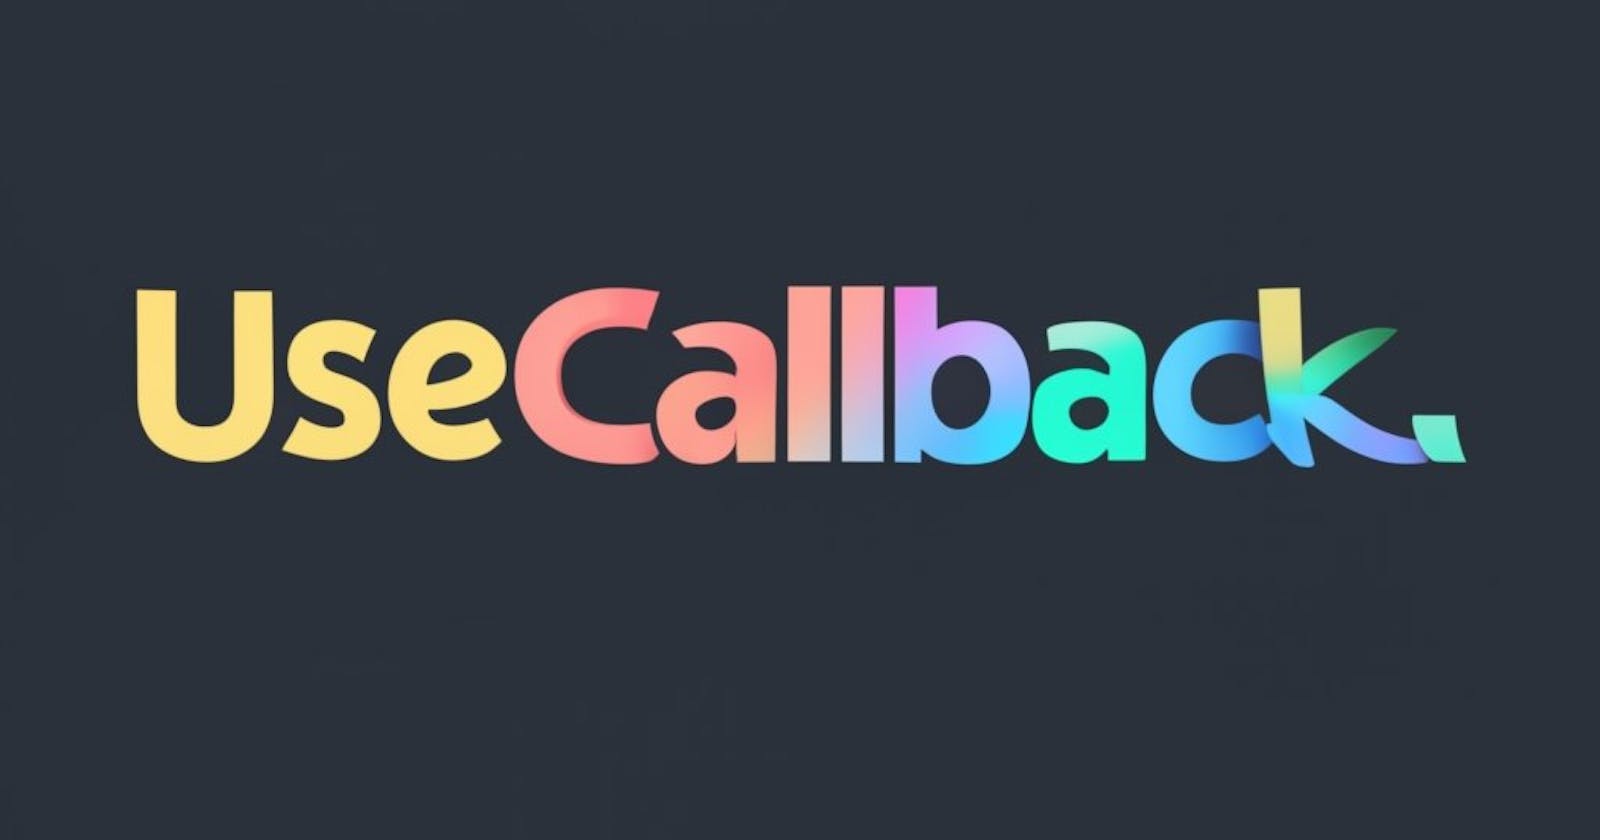 10 interview questions regarding react useCallBack() Hook